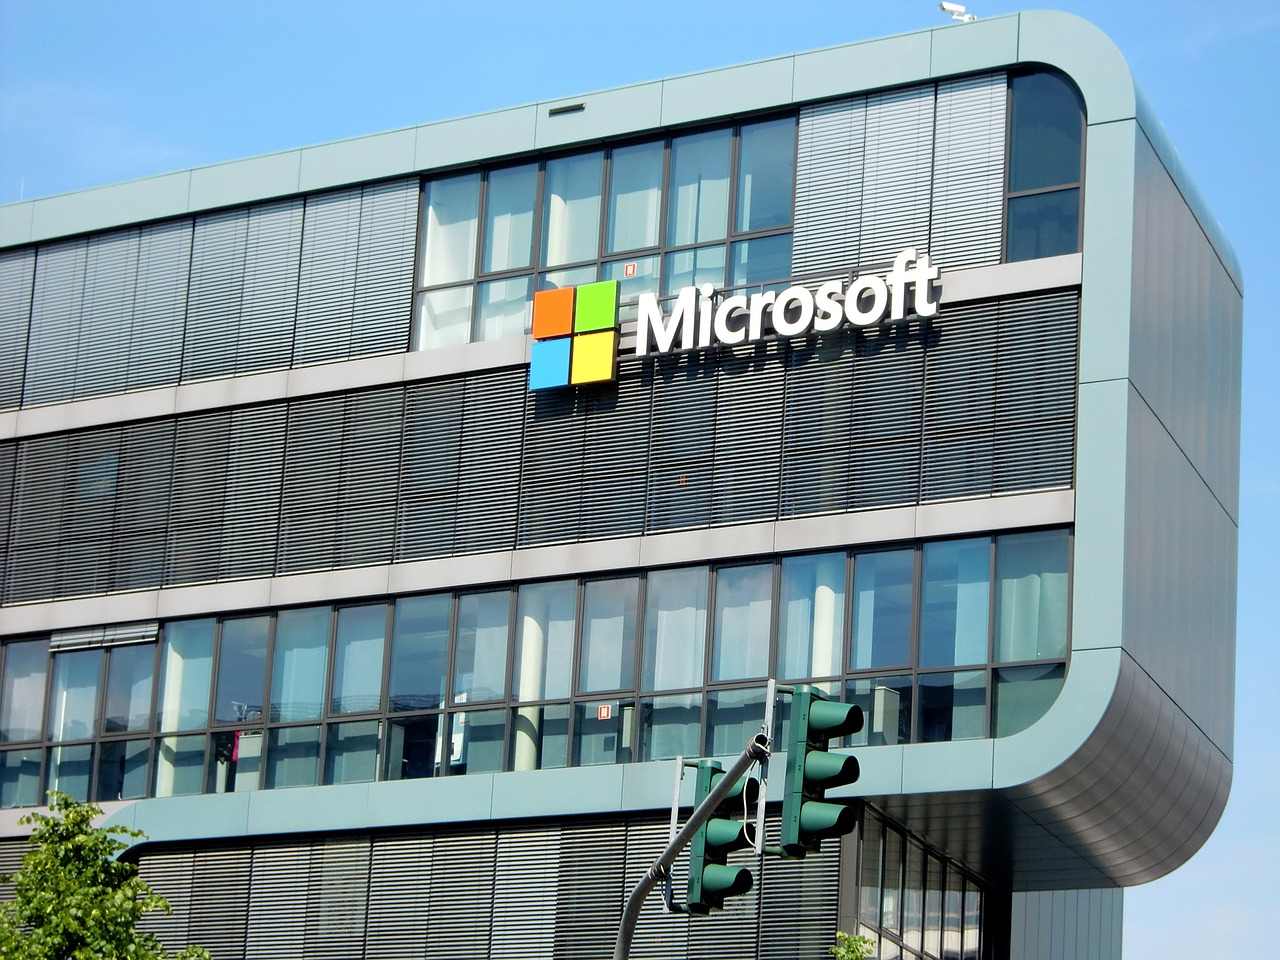 .NET integrates with Microsoft technologies